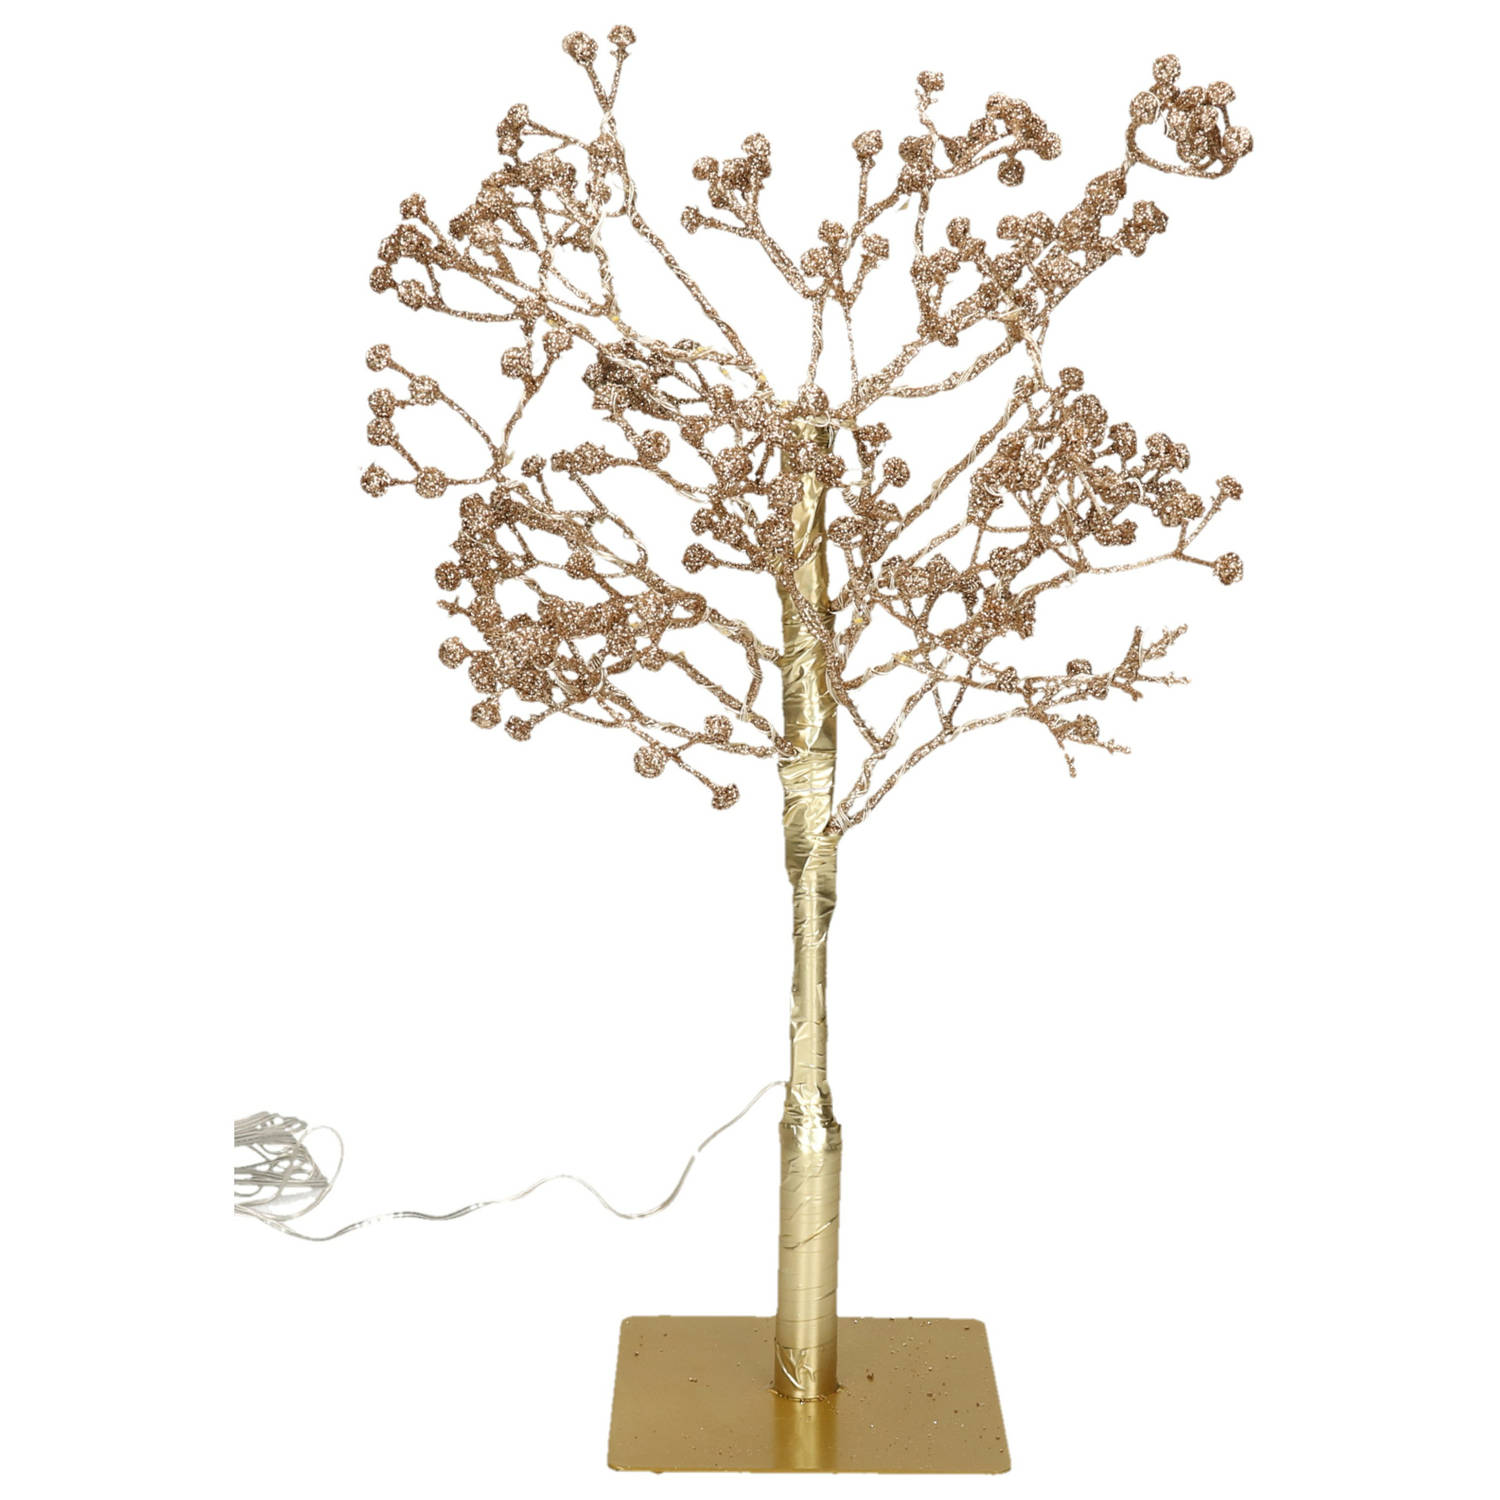 Feeric lights and christmas lichtboom H50 cm goud kunststof kerstverlichting figuur